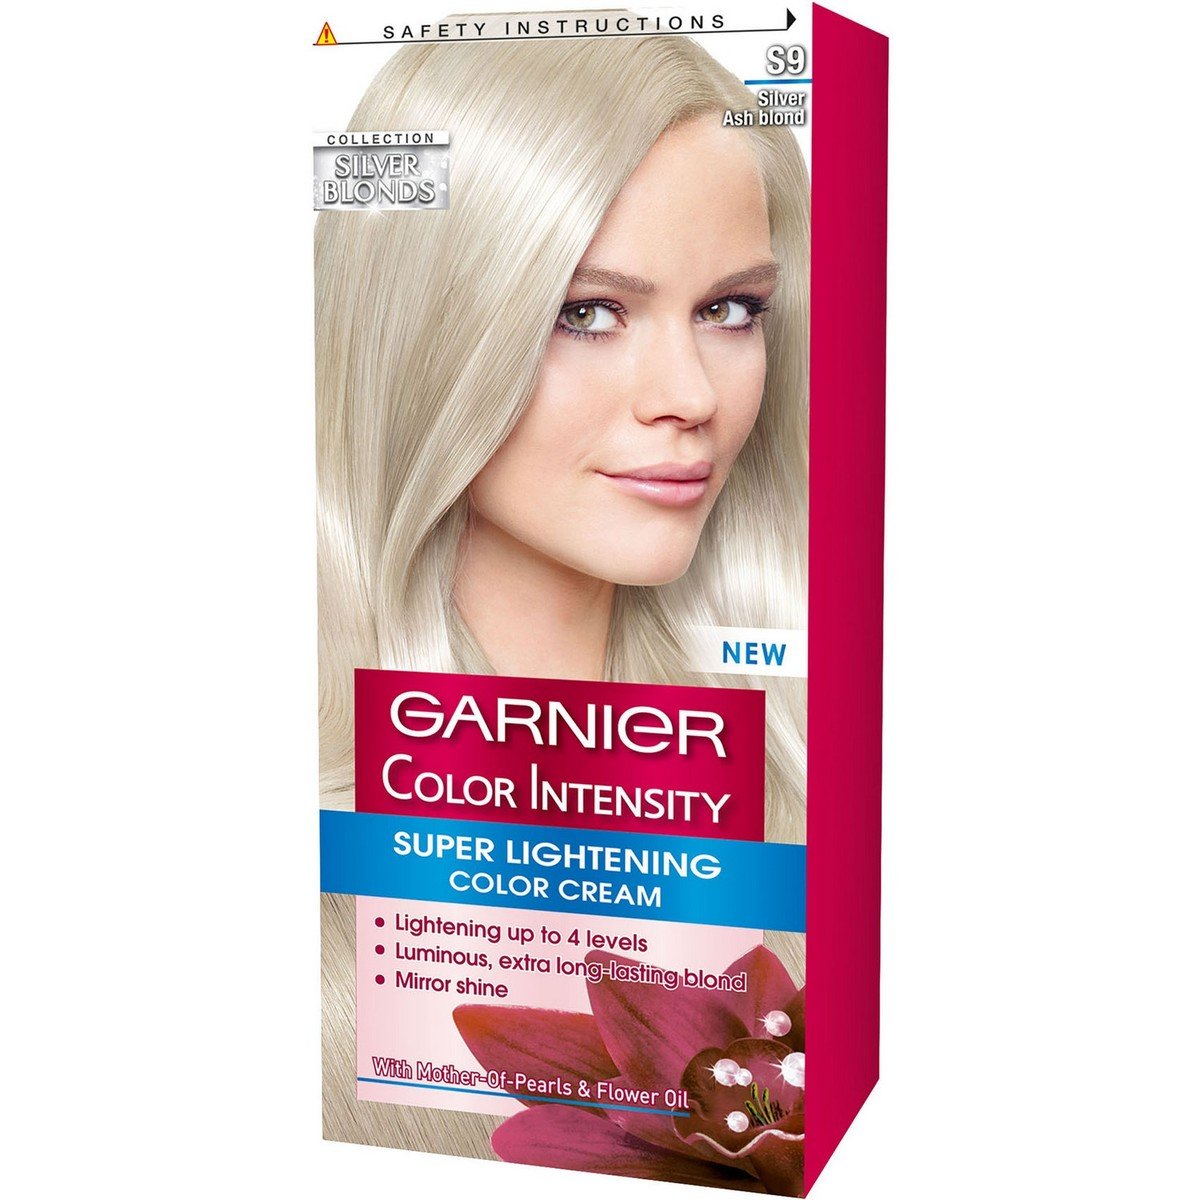 Garnier Color Intensity S9 Silver Blonds 1pkt Online at Best Price |  Permanent Colorants | Lulu KSA